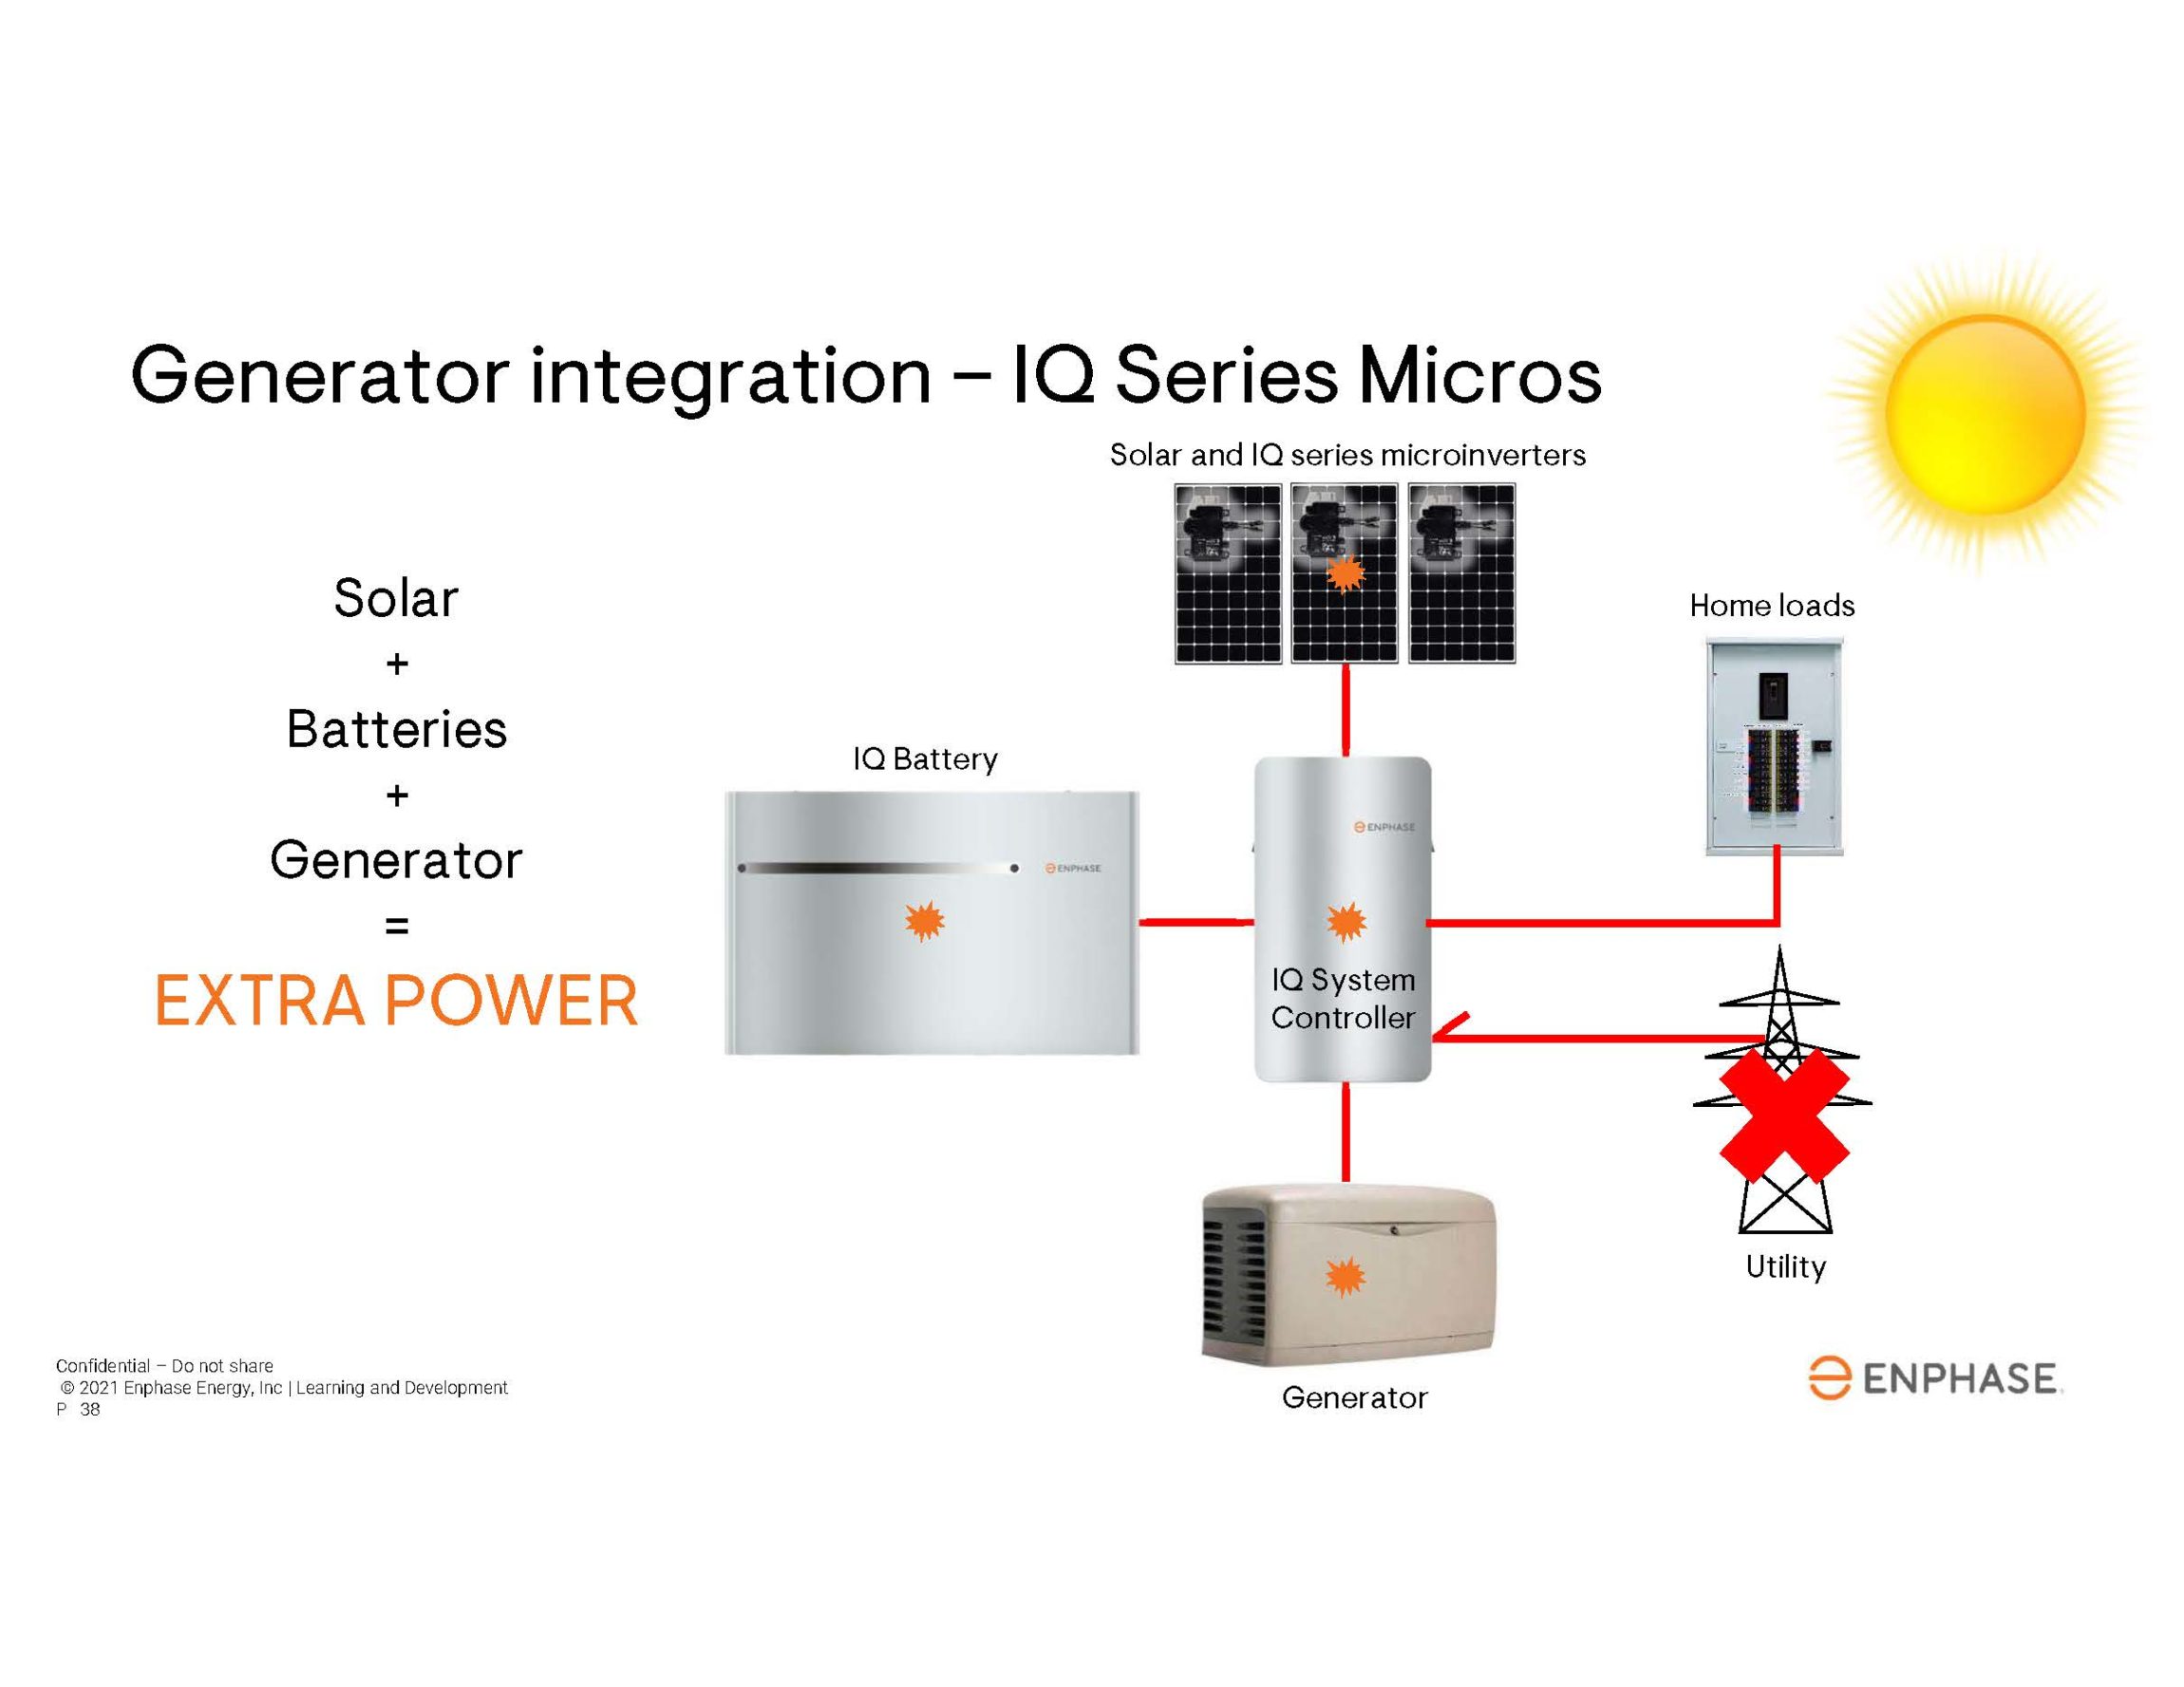 Enphase IQ Series Solar Infographic